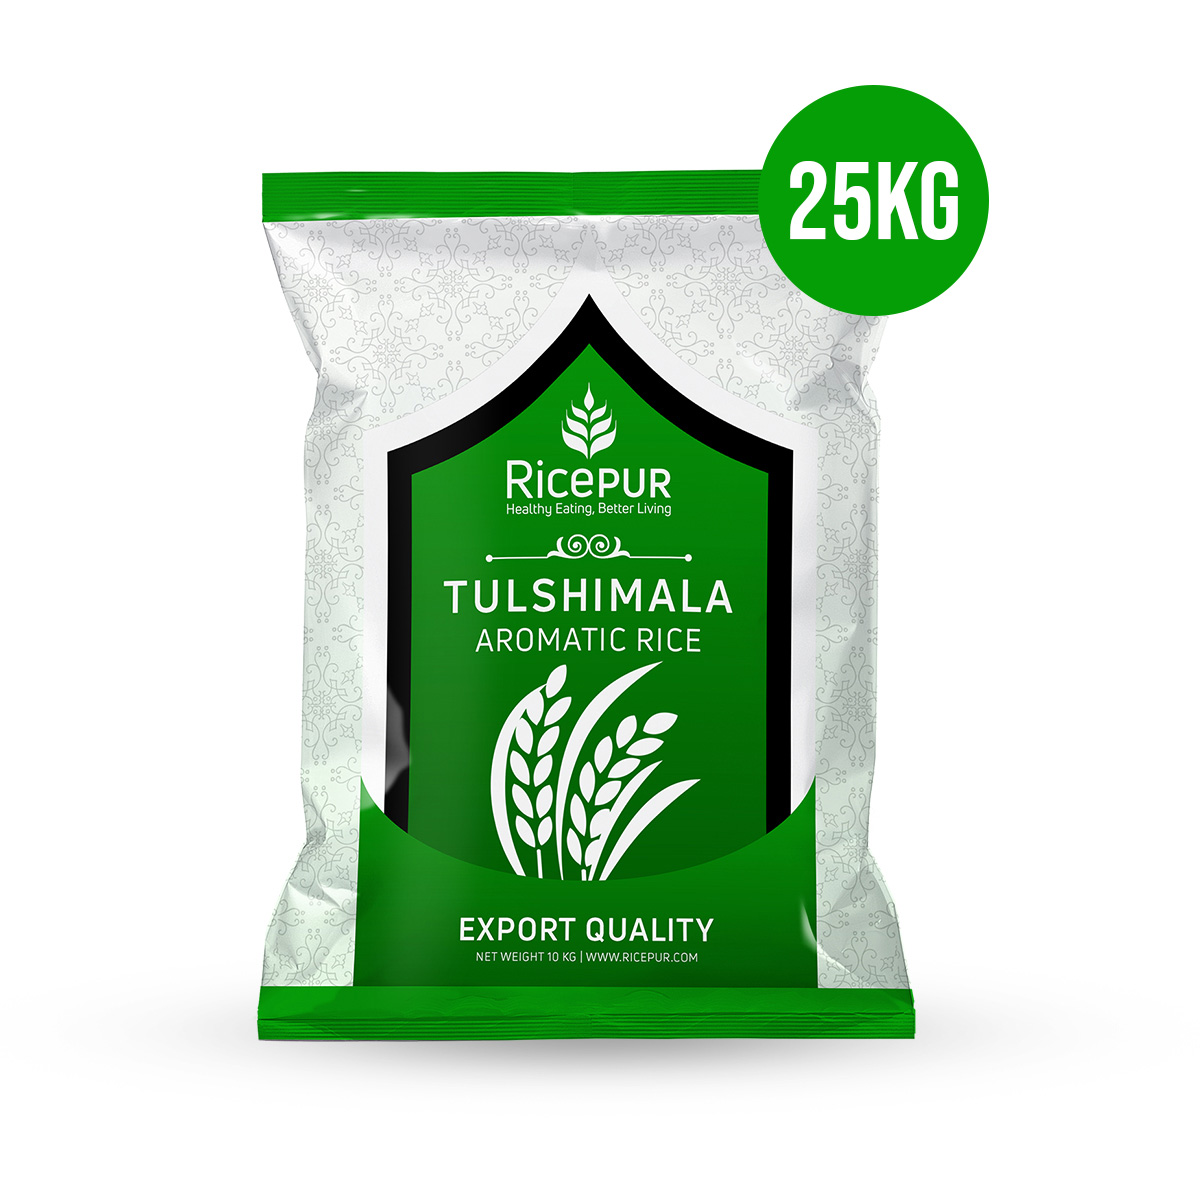 Tulshimala Aromatic Rice 25KG